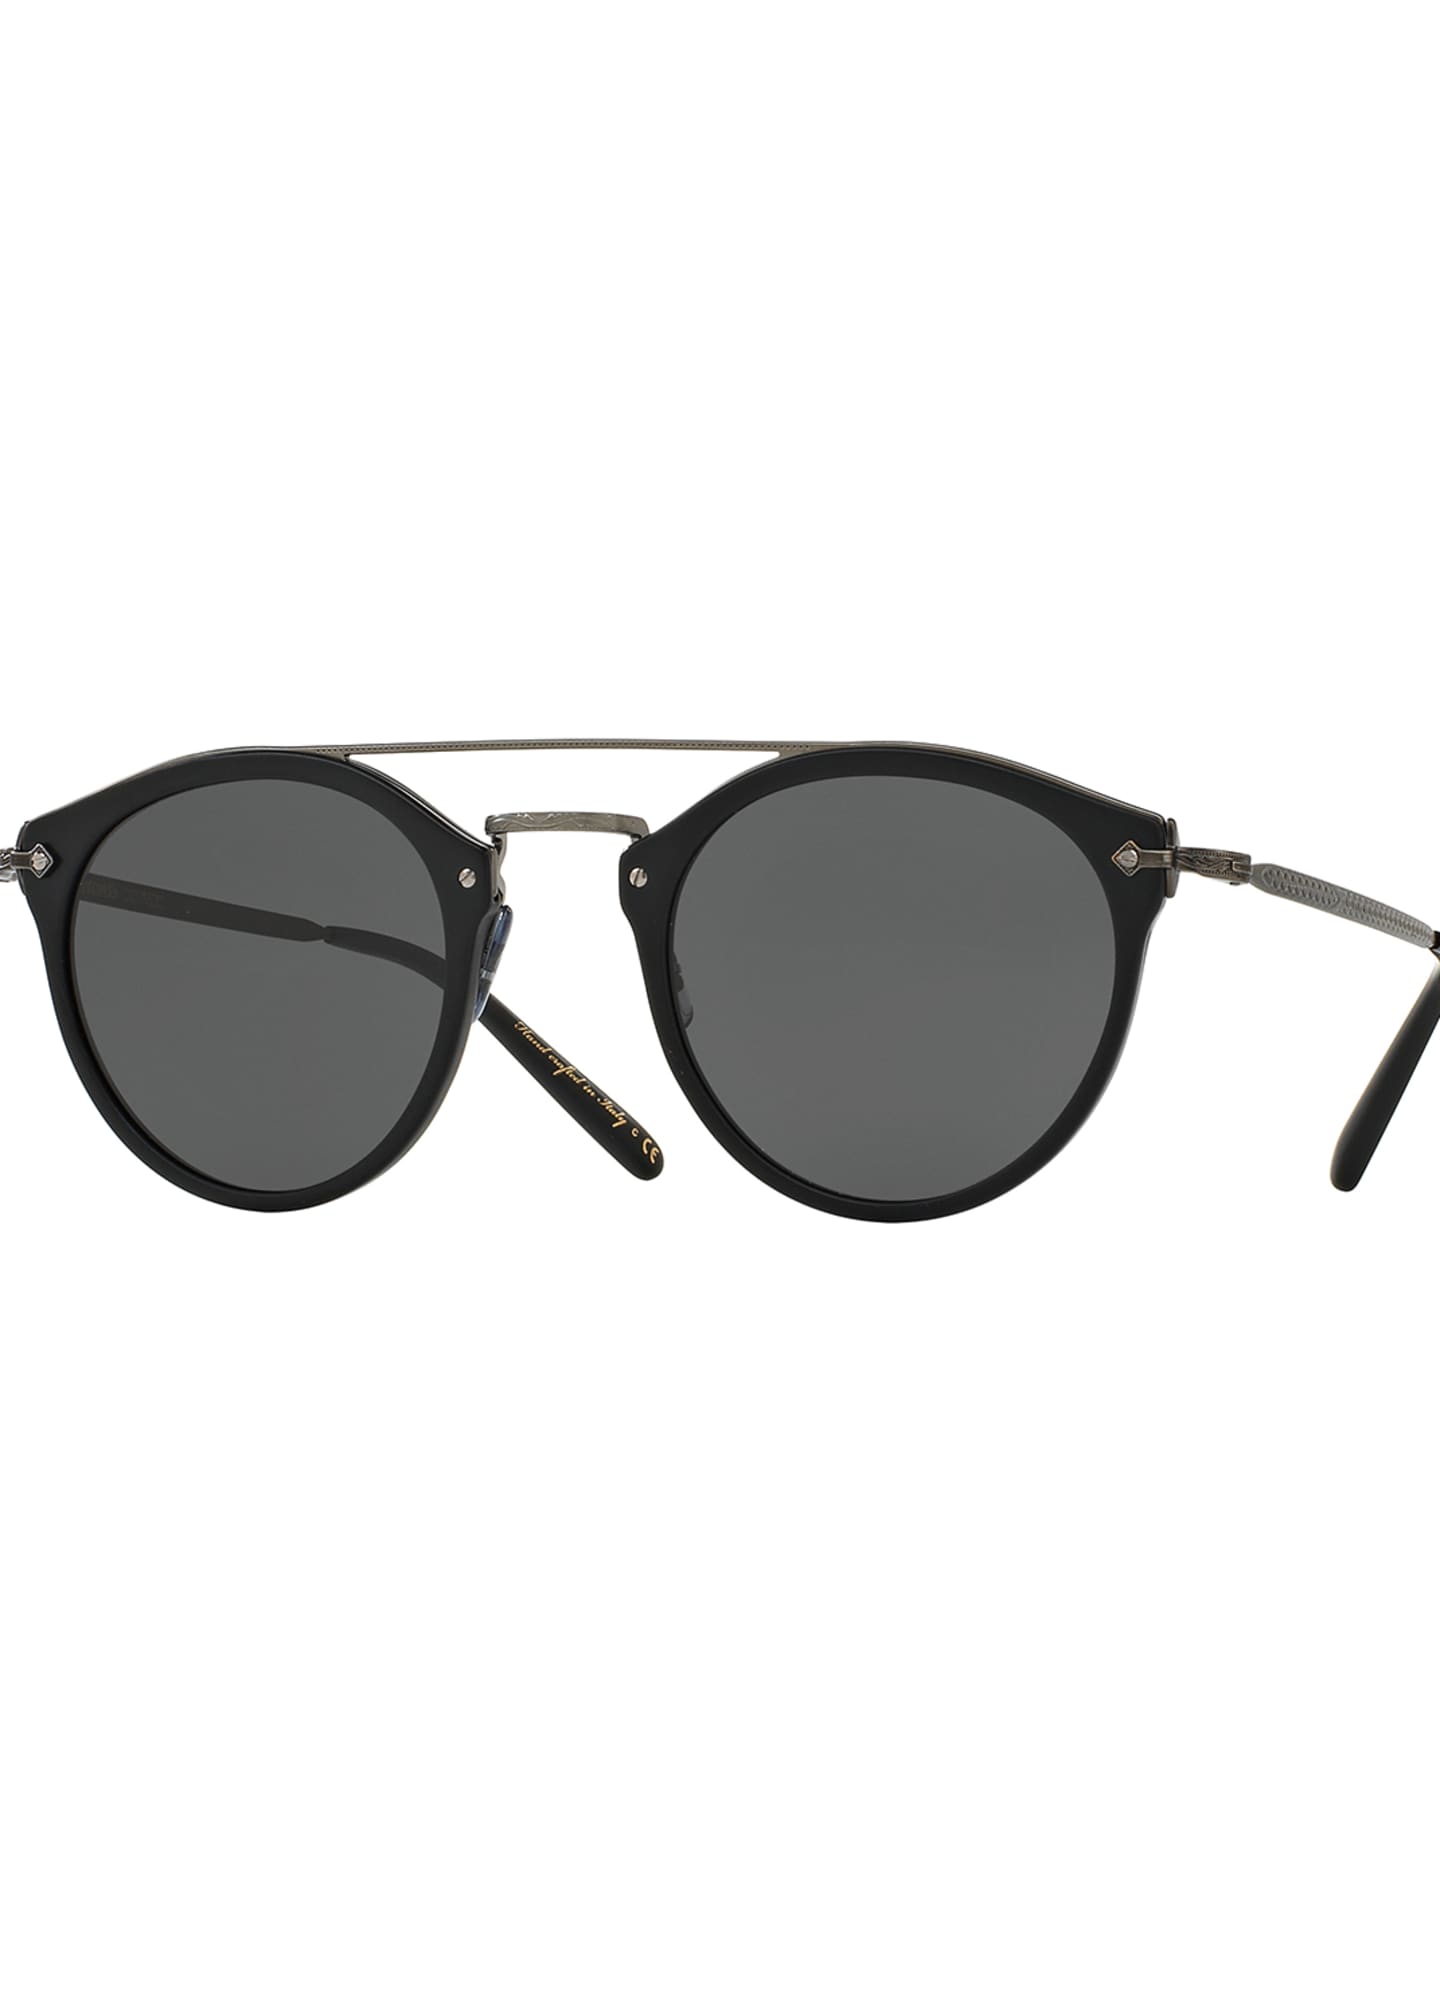 Oliver Peoples Men's Sunglasses : Round Sunglasses at Bergdorf Goodman